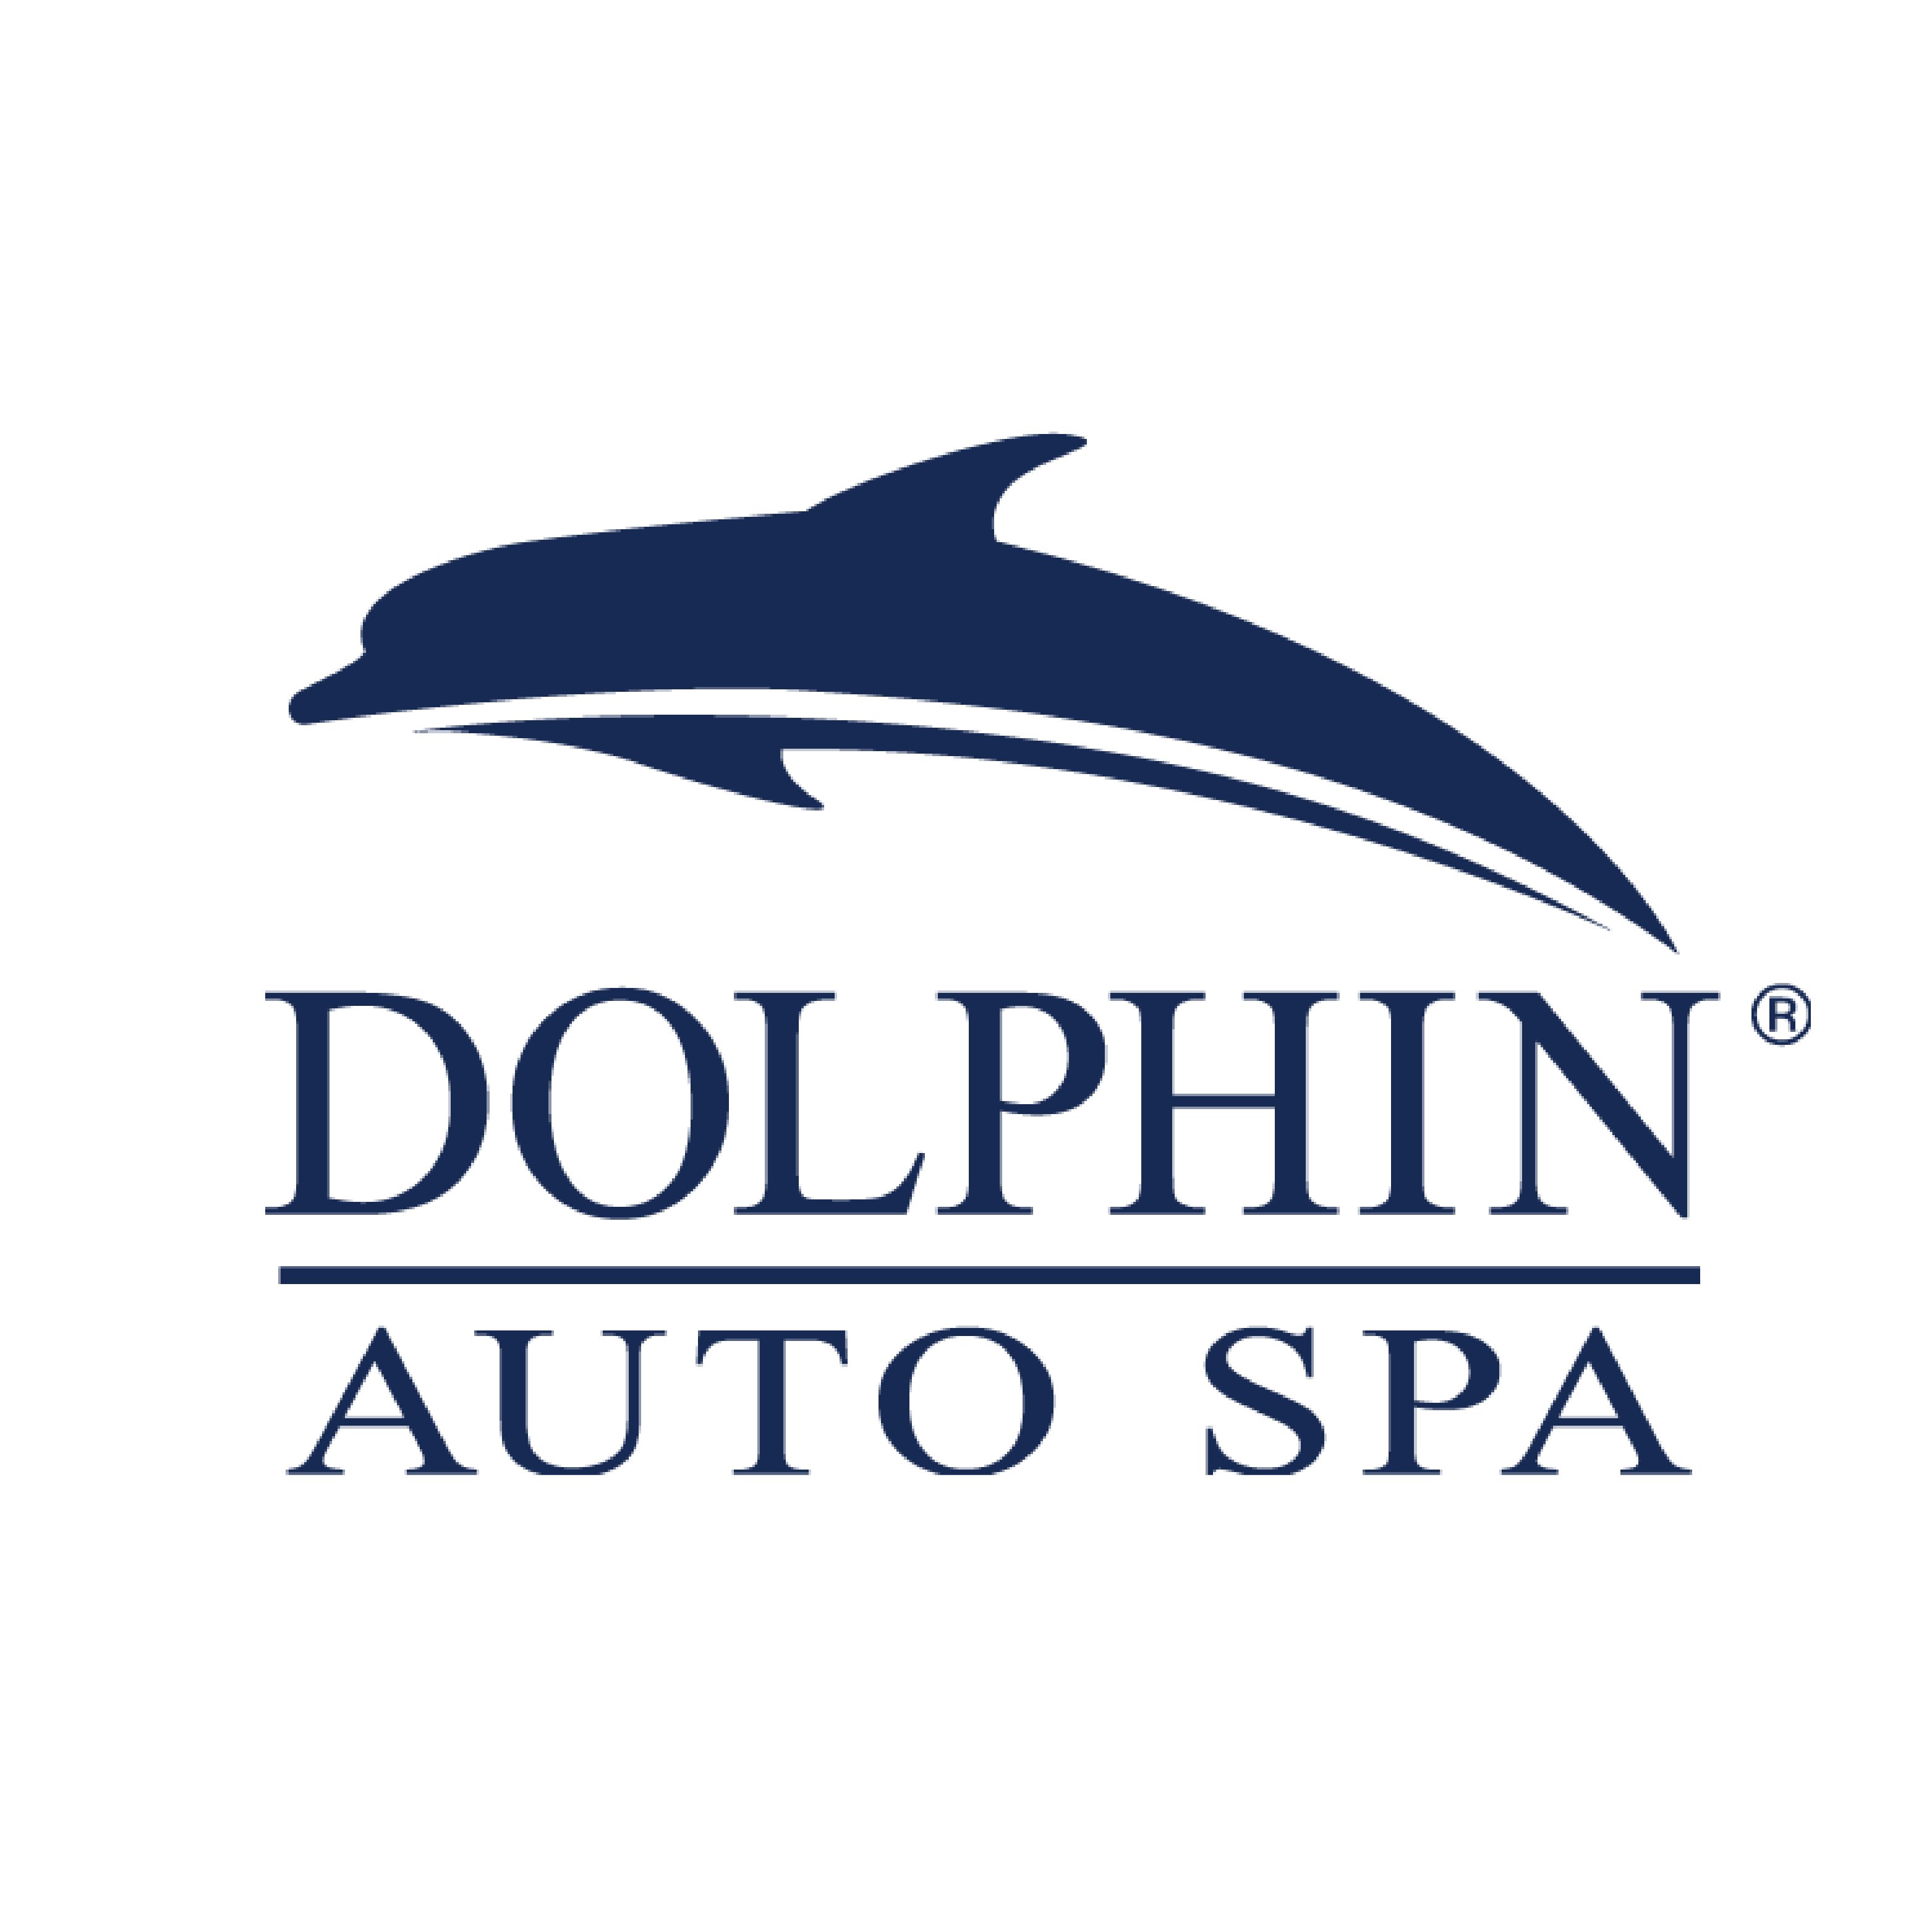 Dolphin Auto Spa